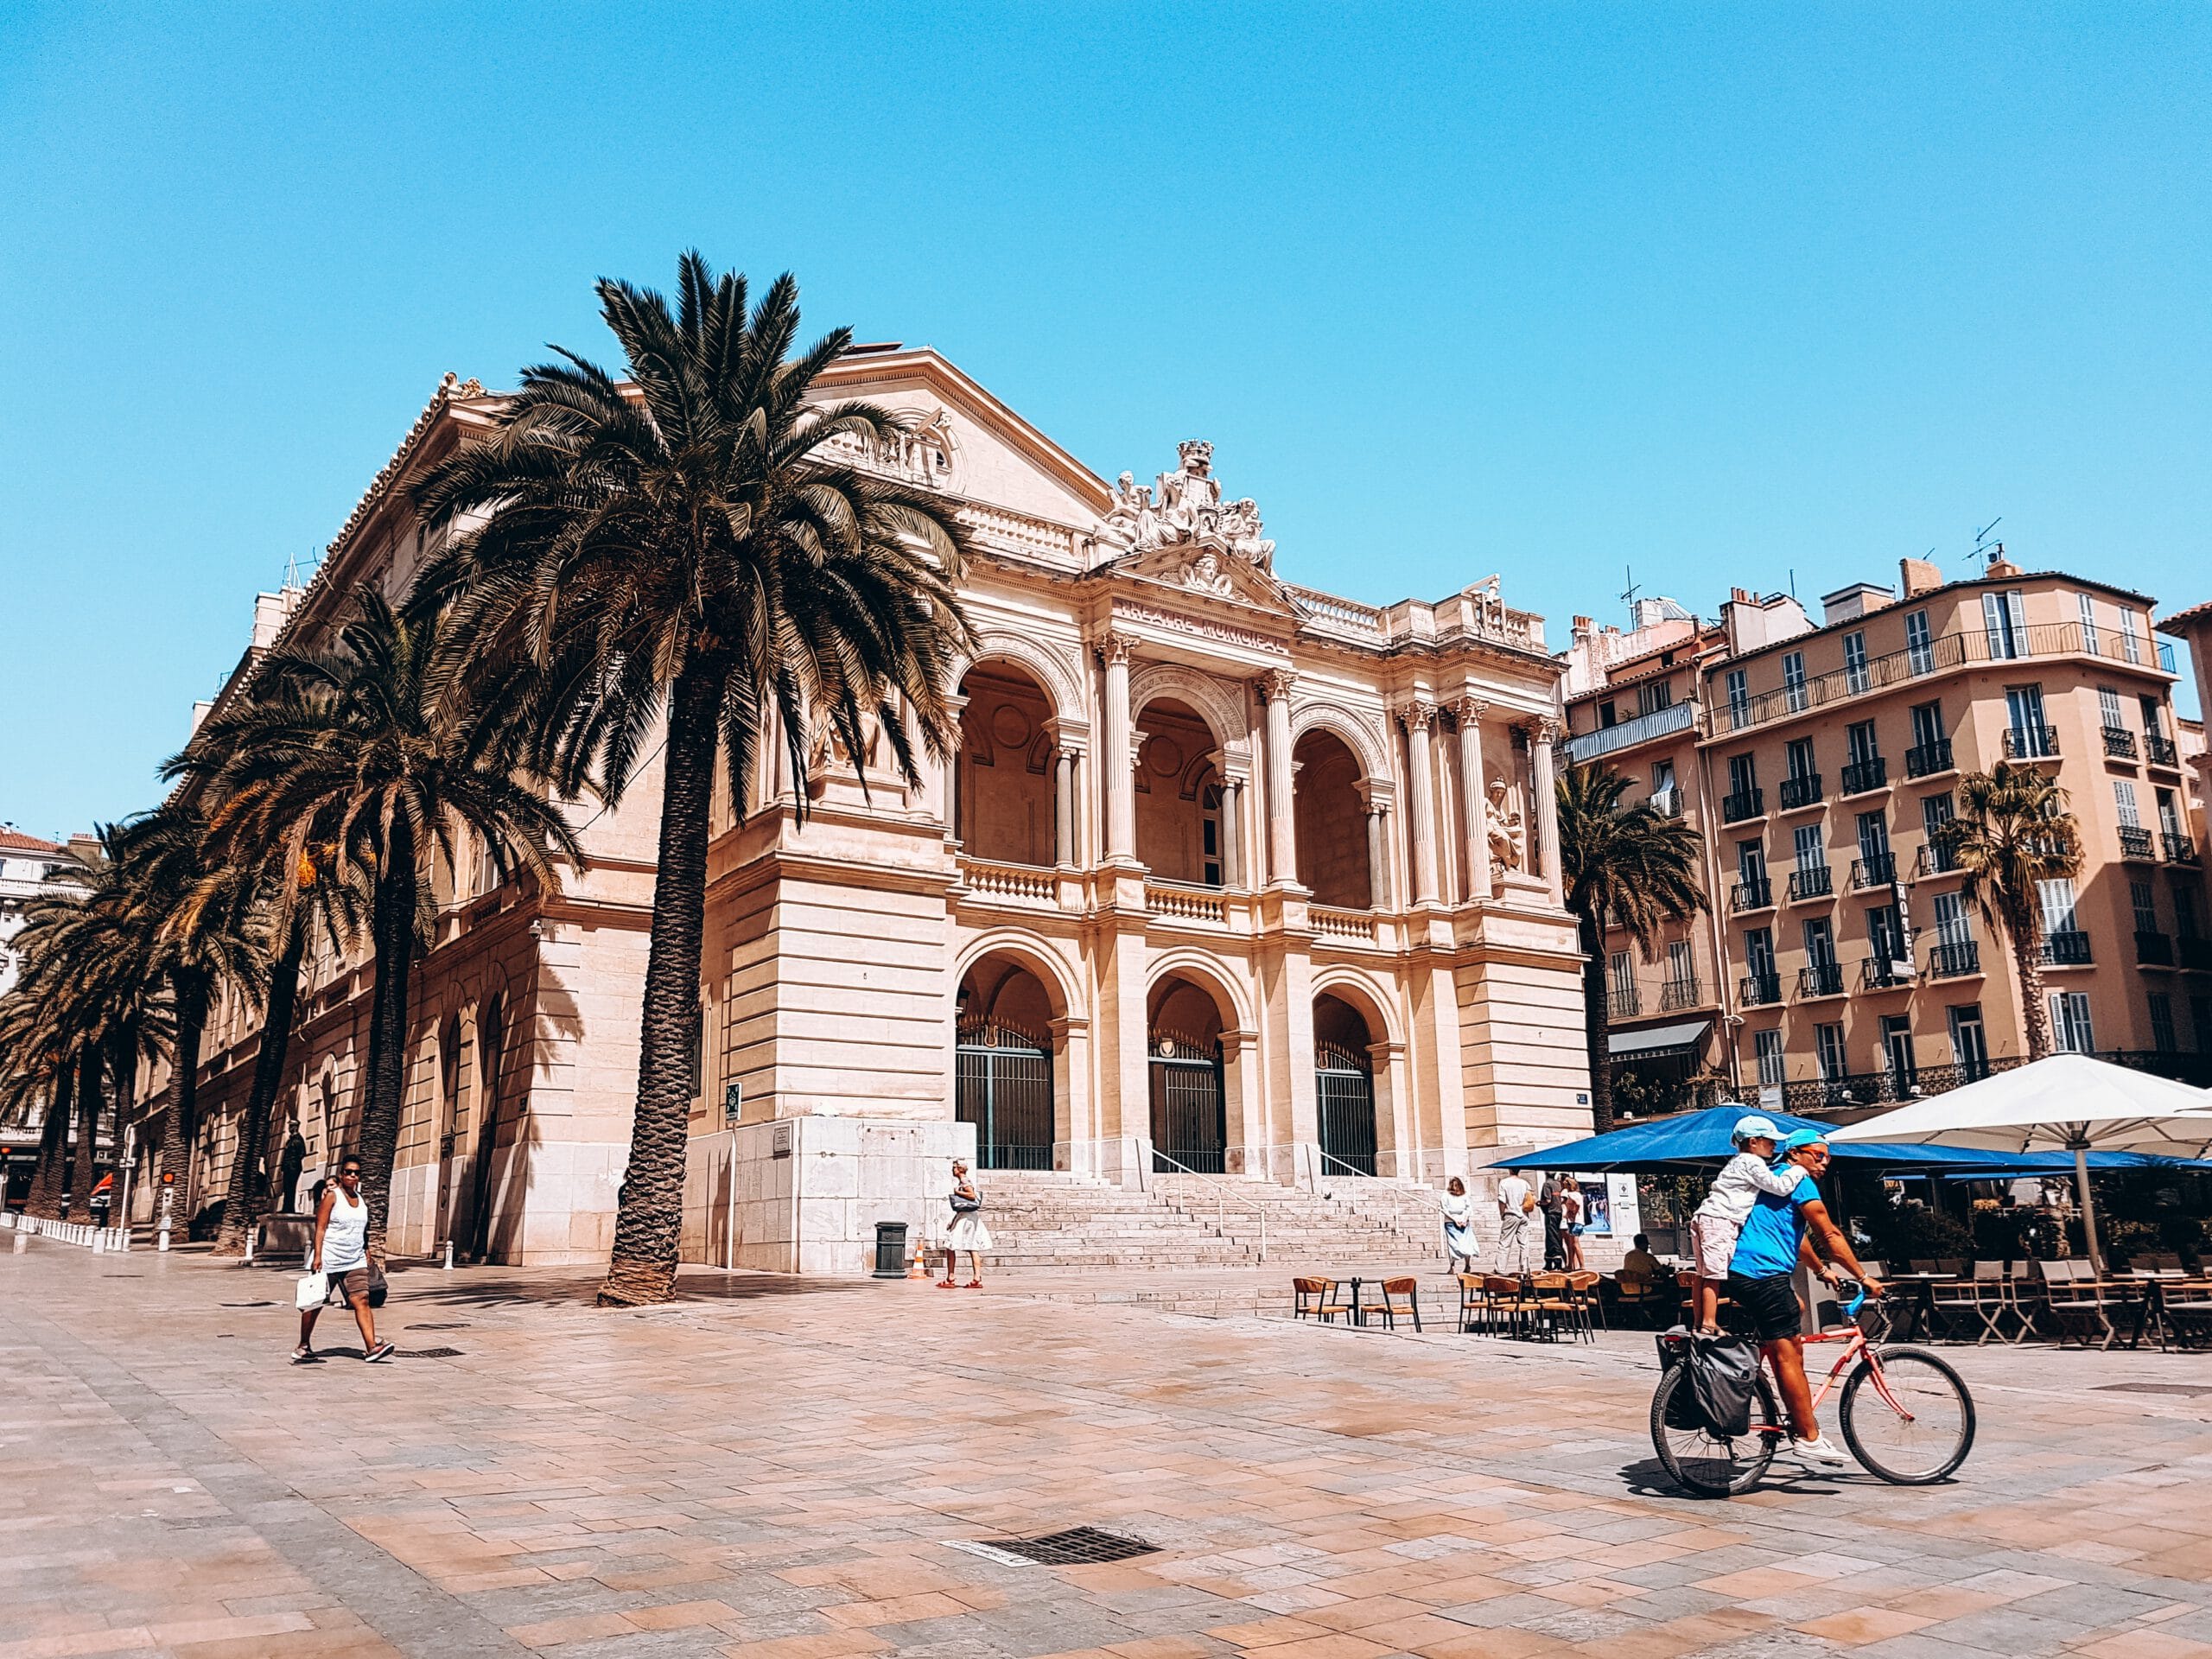 Frankrijk-Toulon-plein-gebouw-palmbomen